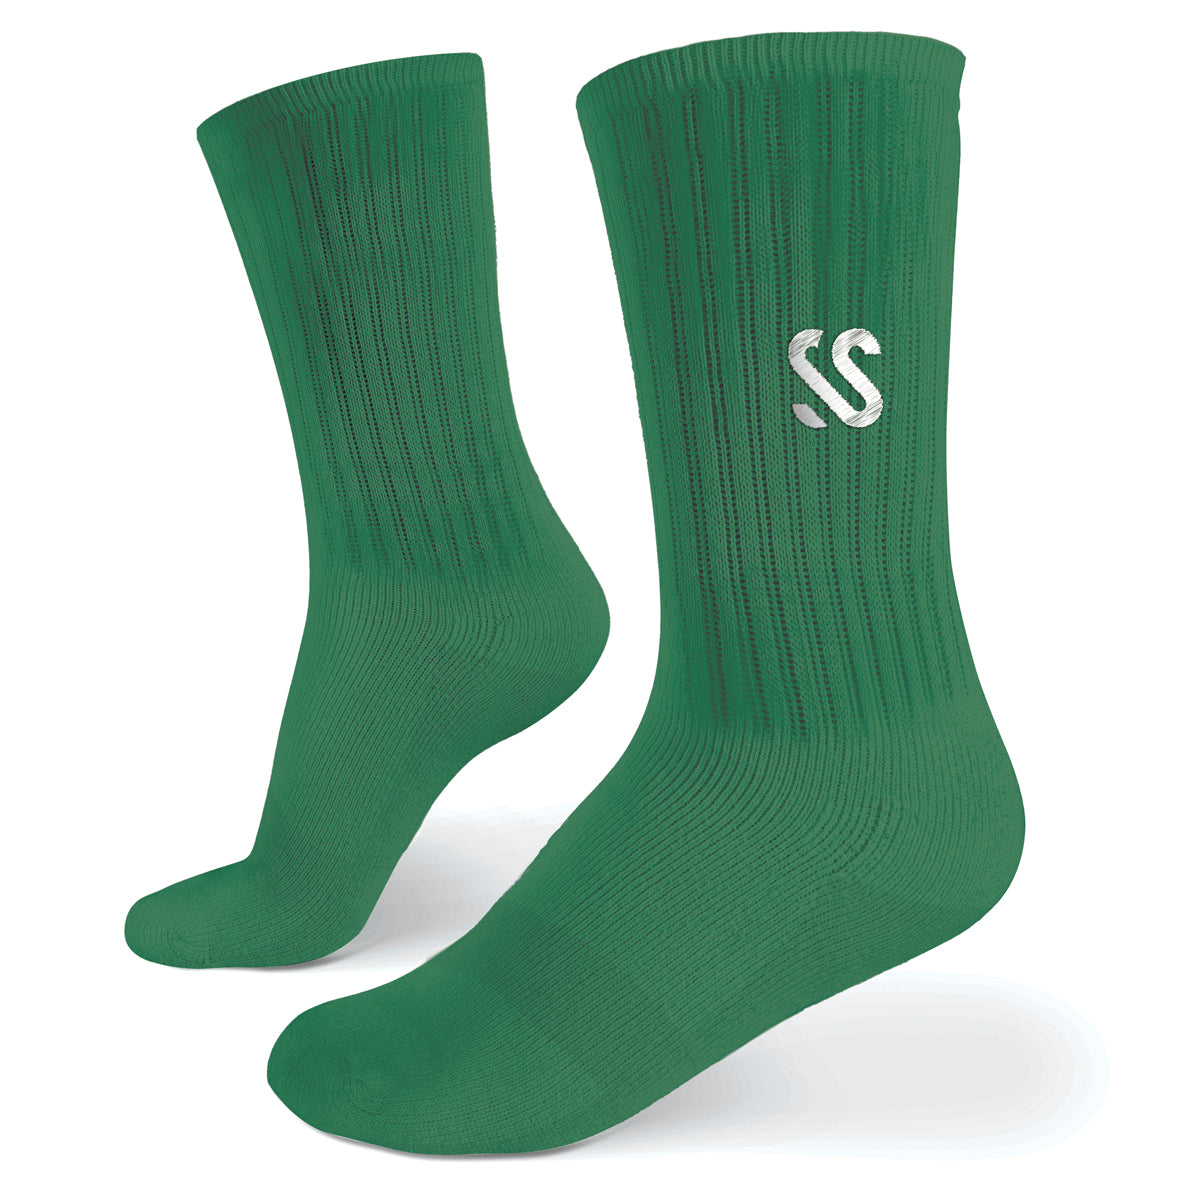 A pair of green crew length socks